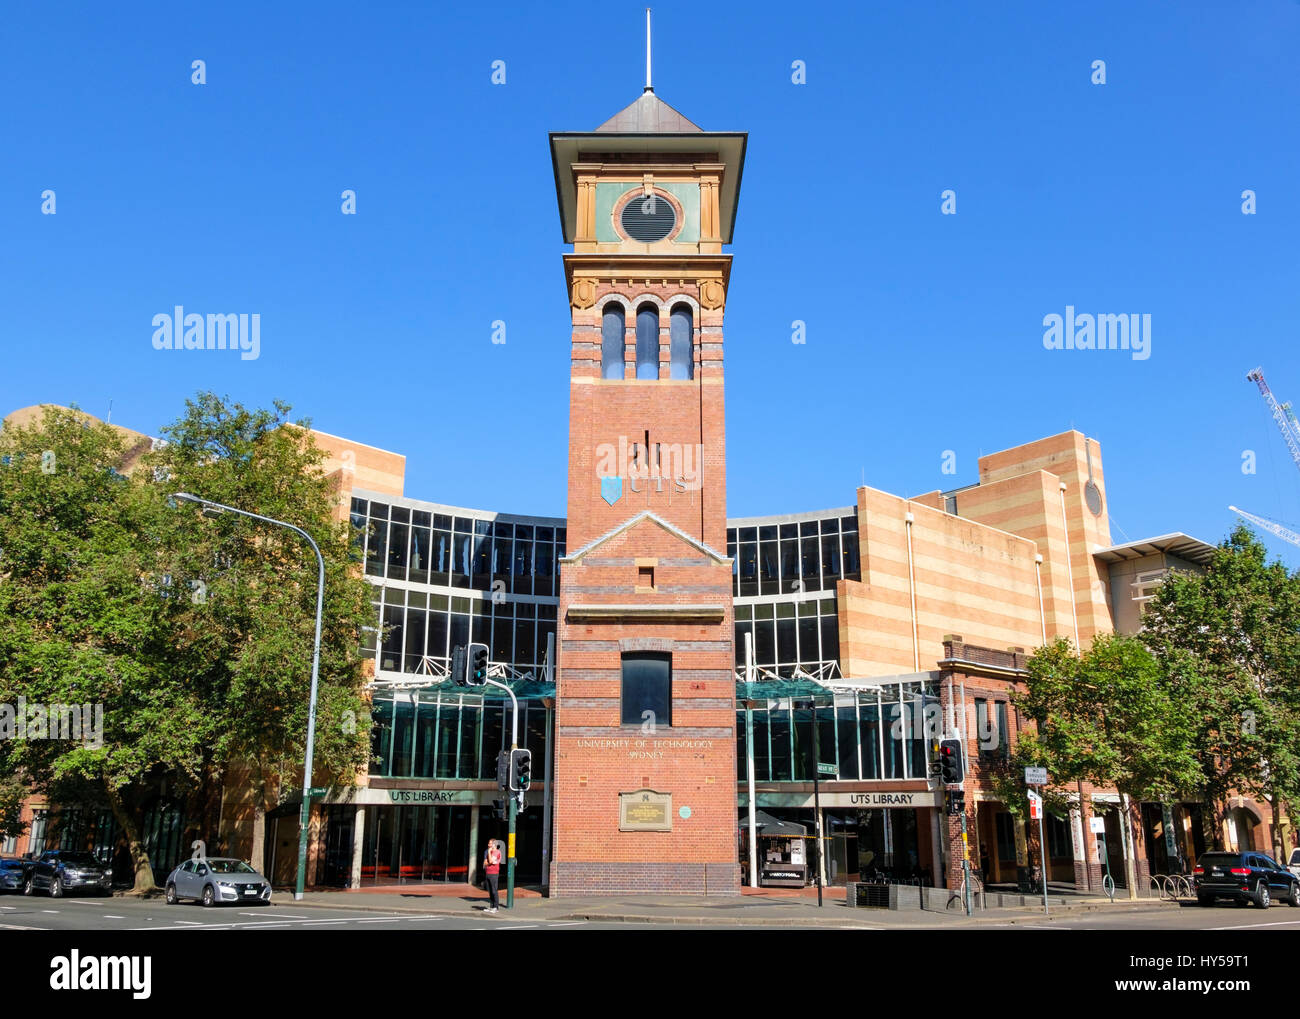 UTS (University of Technology, Sydney) Haymarket Campus - Uni-Bibliothek und Clock Tower. Quay Street, Ultimo. Australische Universität Architektur Stockfoto